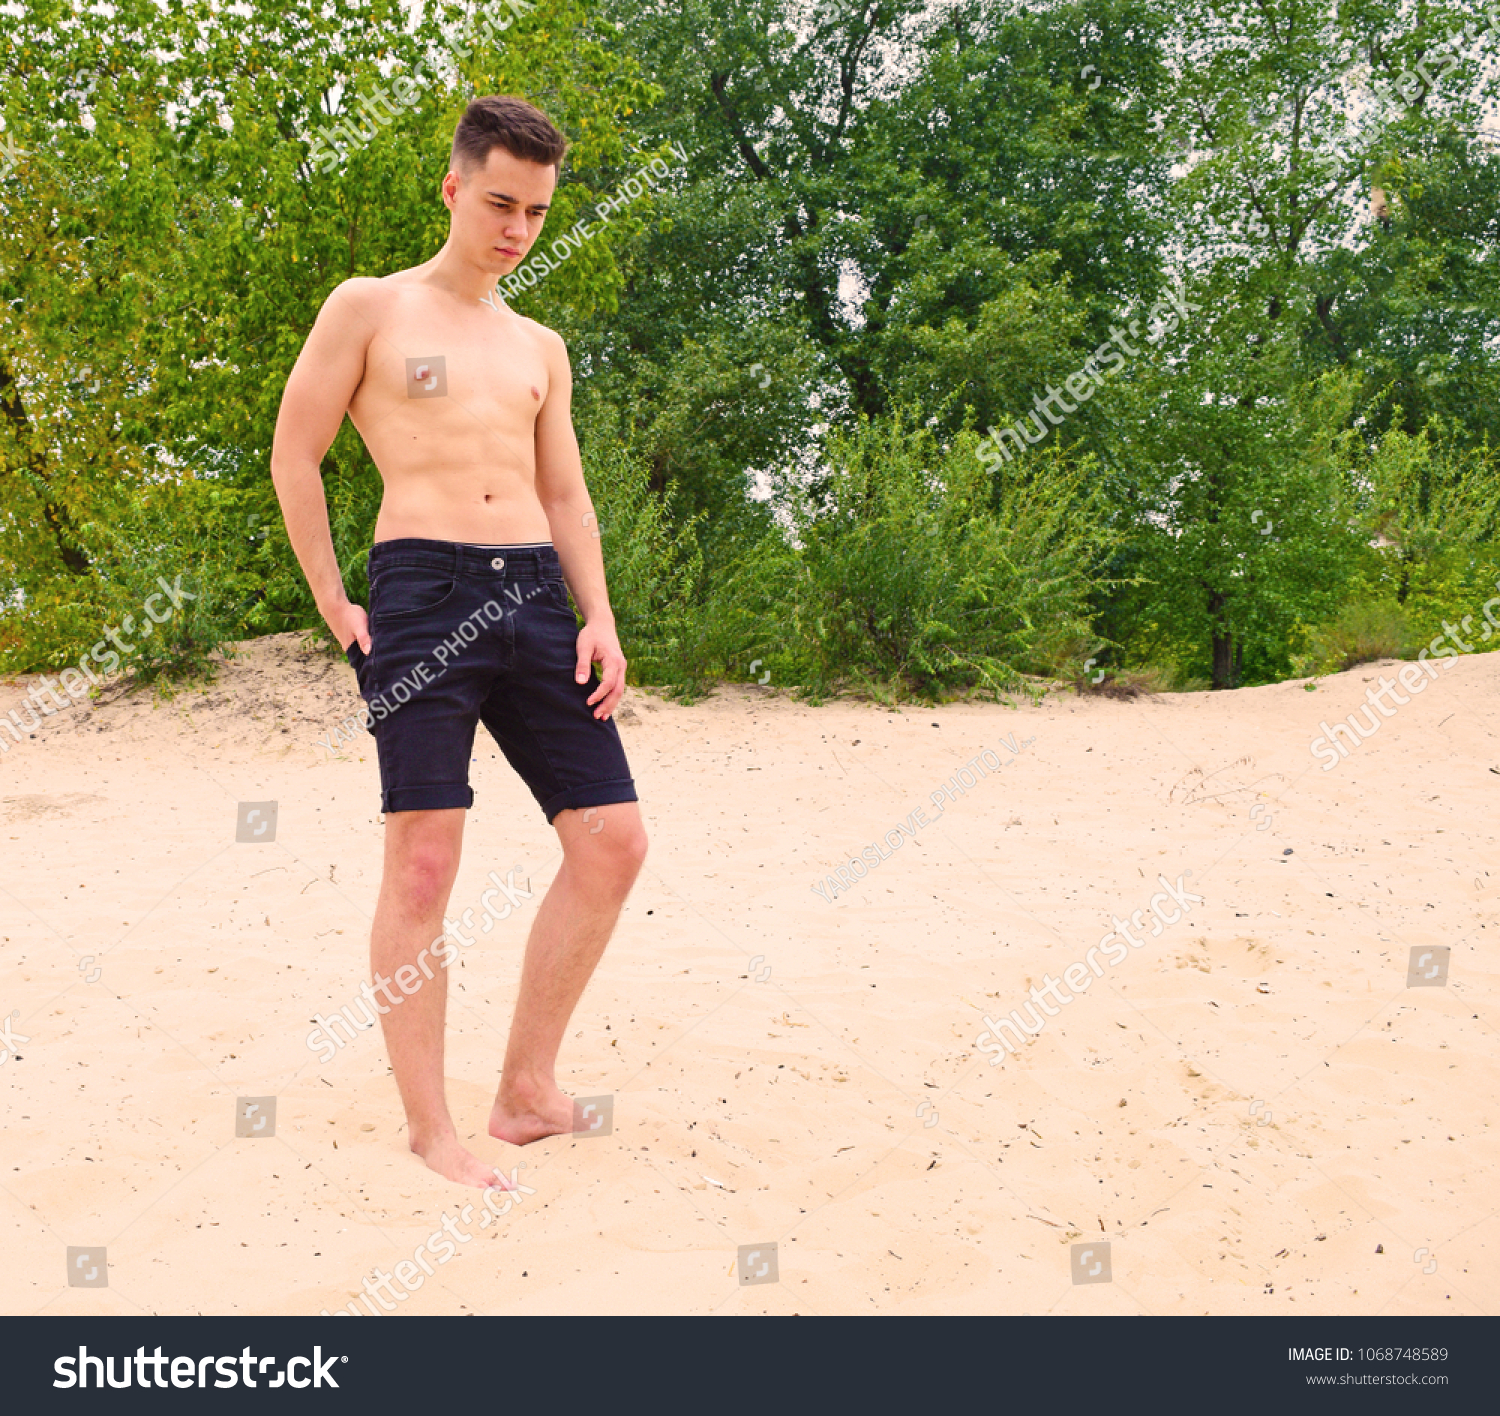 porn russian beaches picture